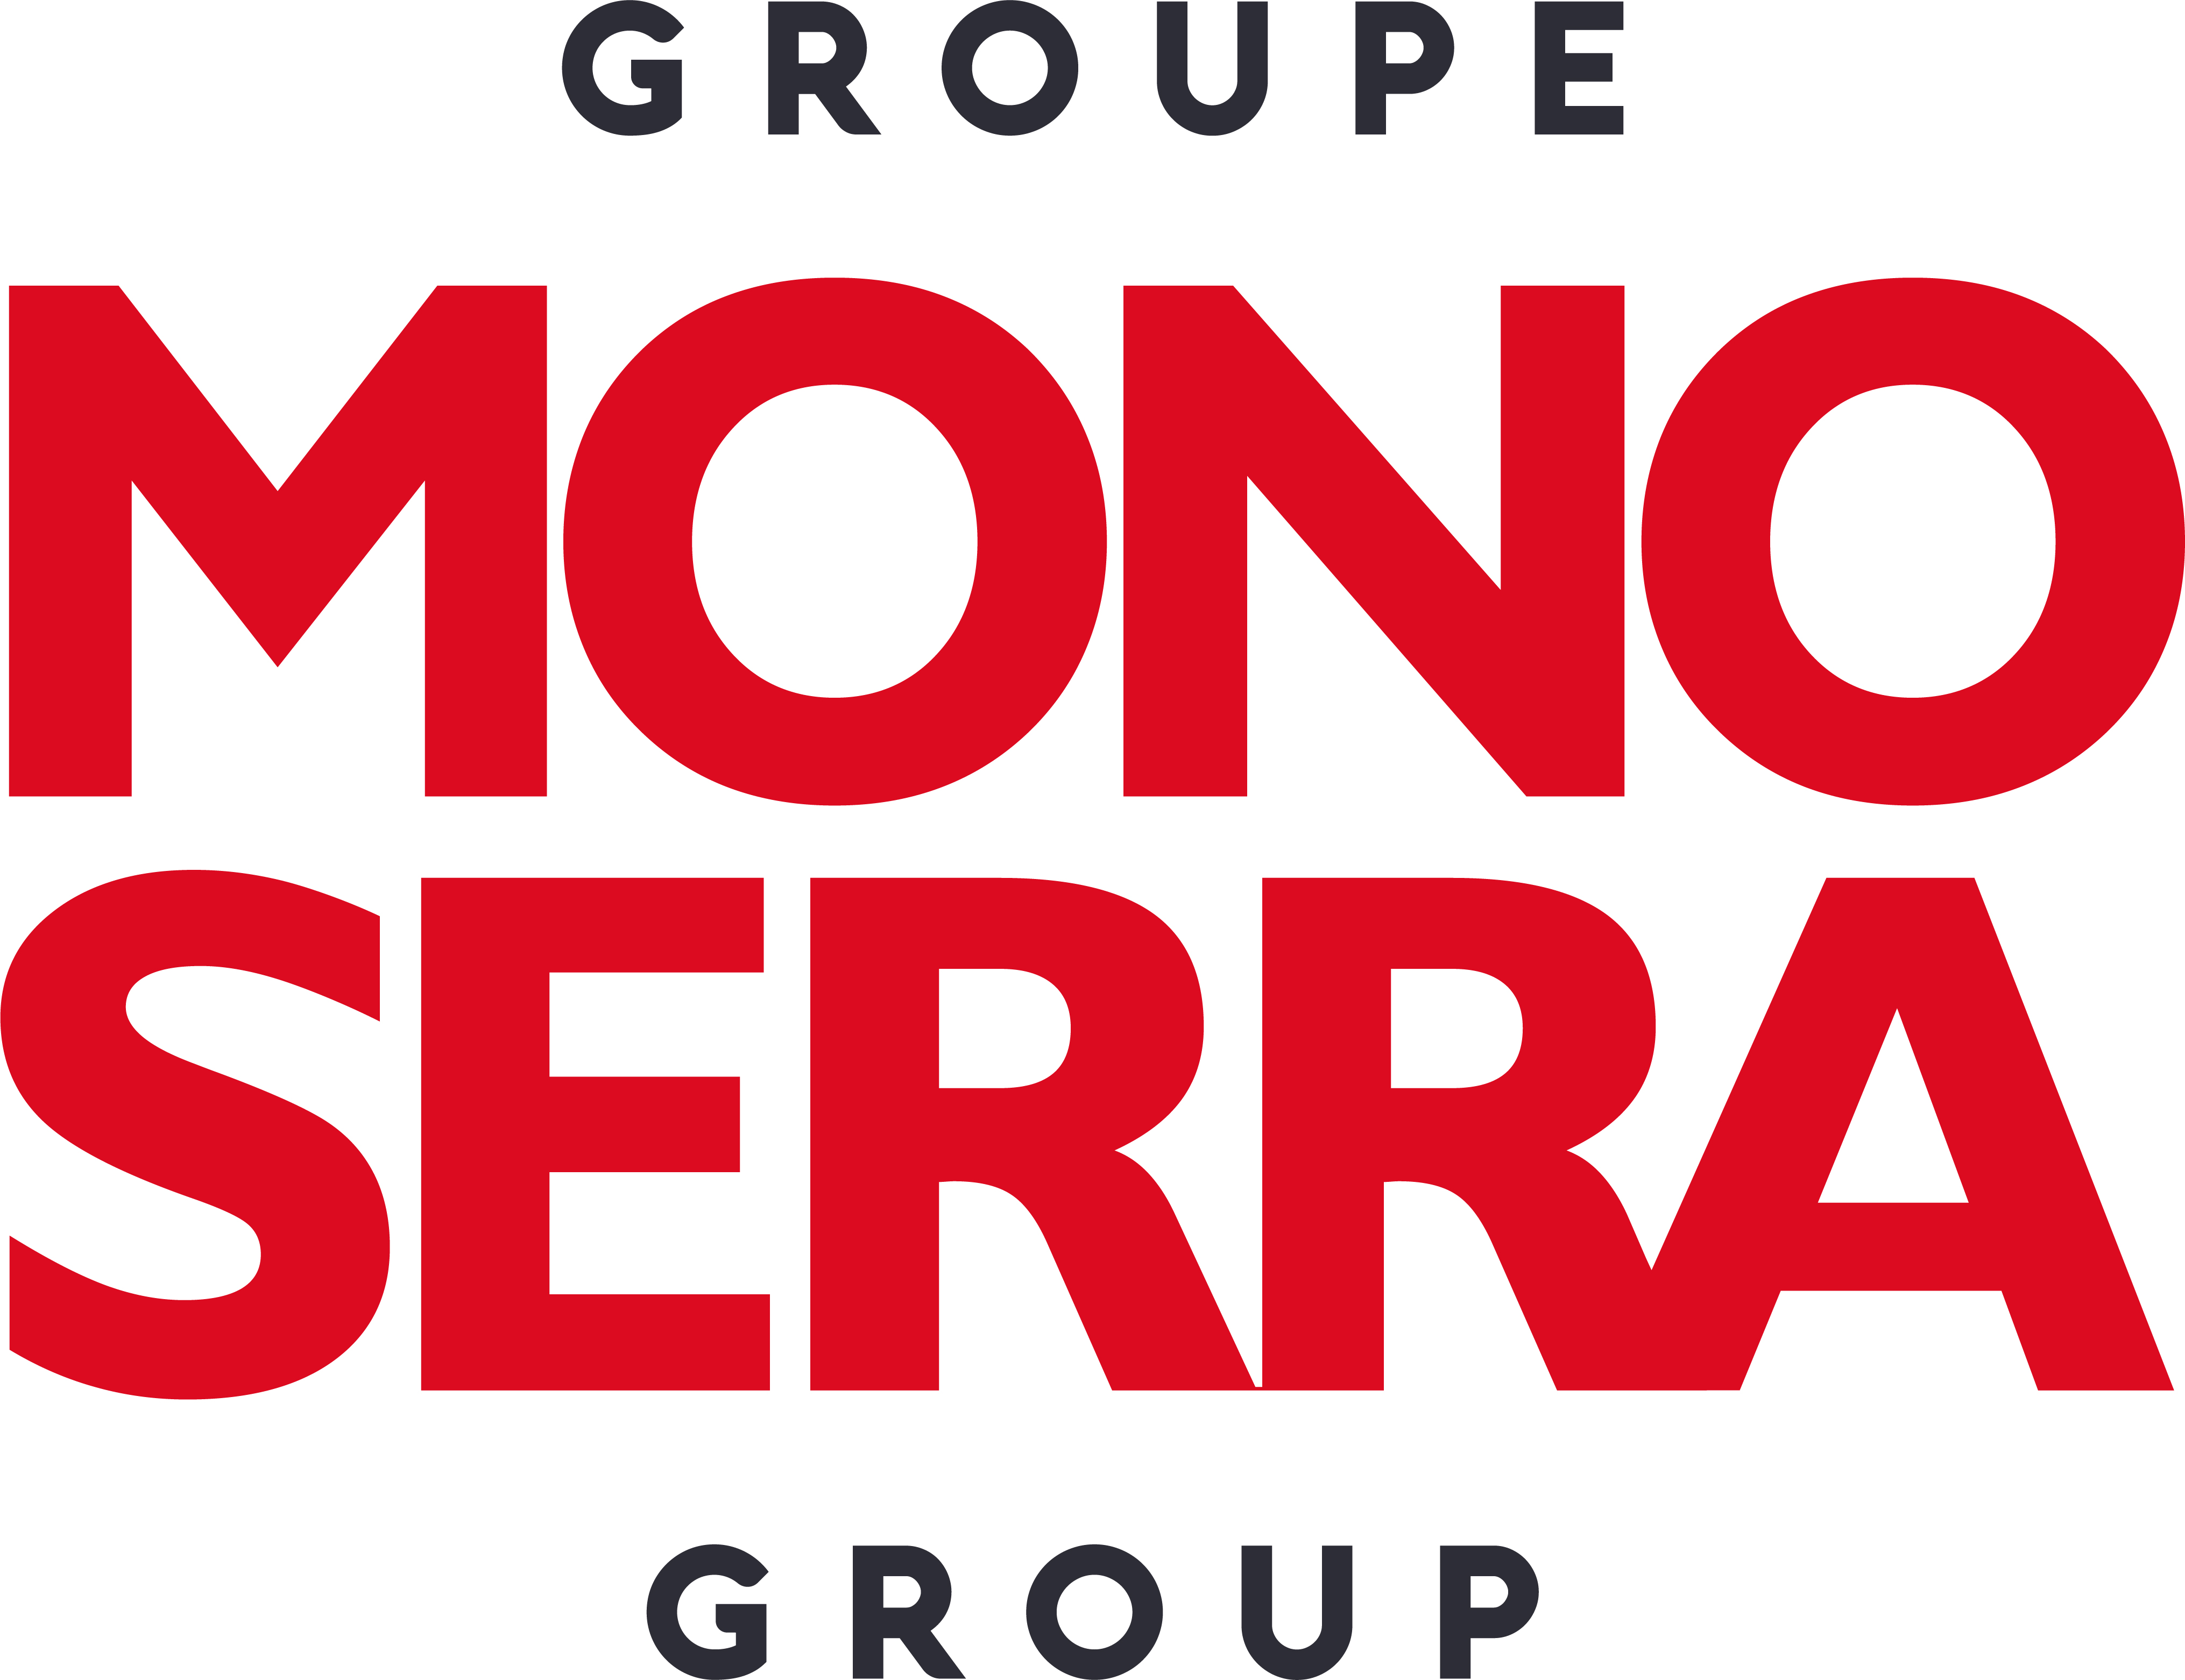 Mono Serra Group Logo 1000x1000px.jpg